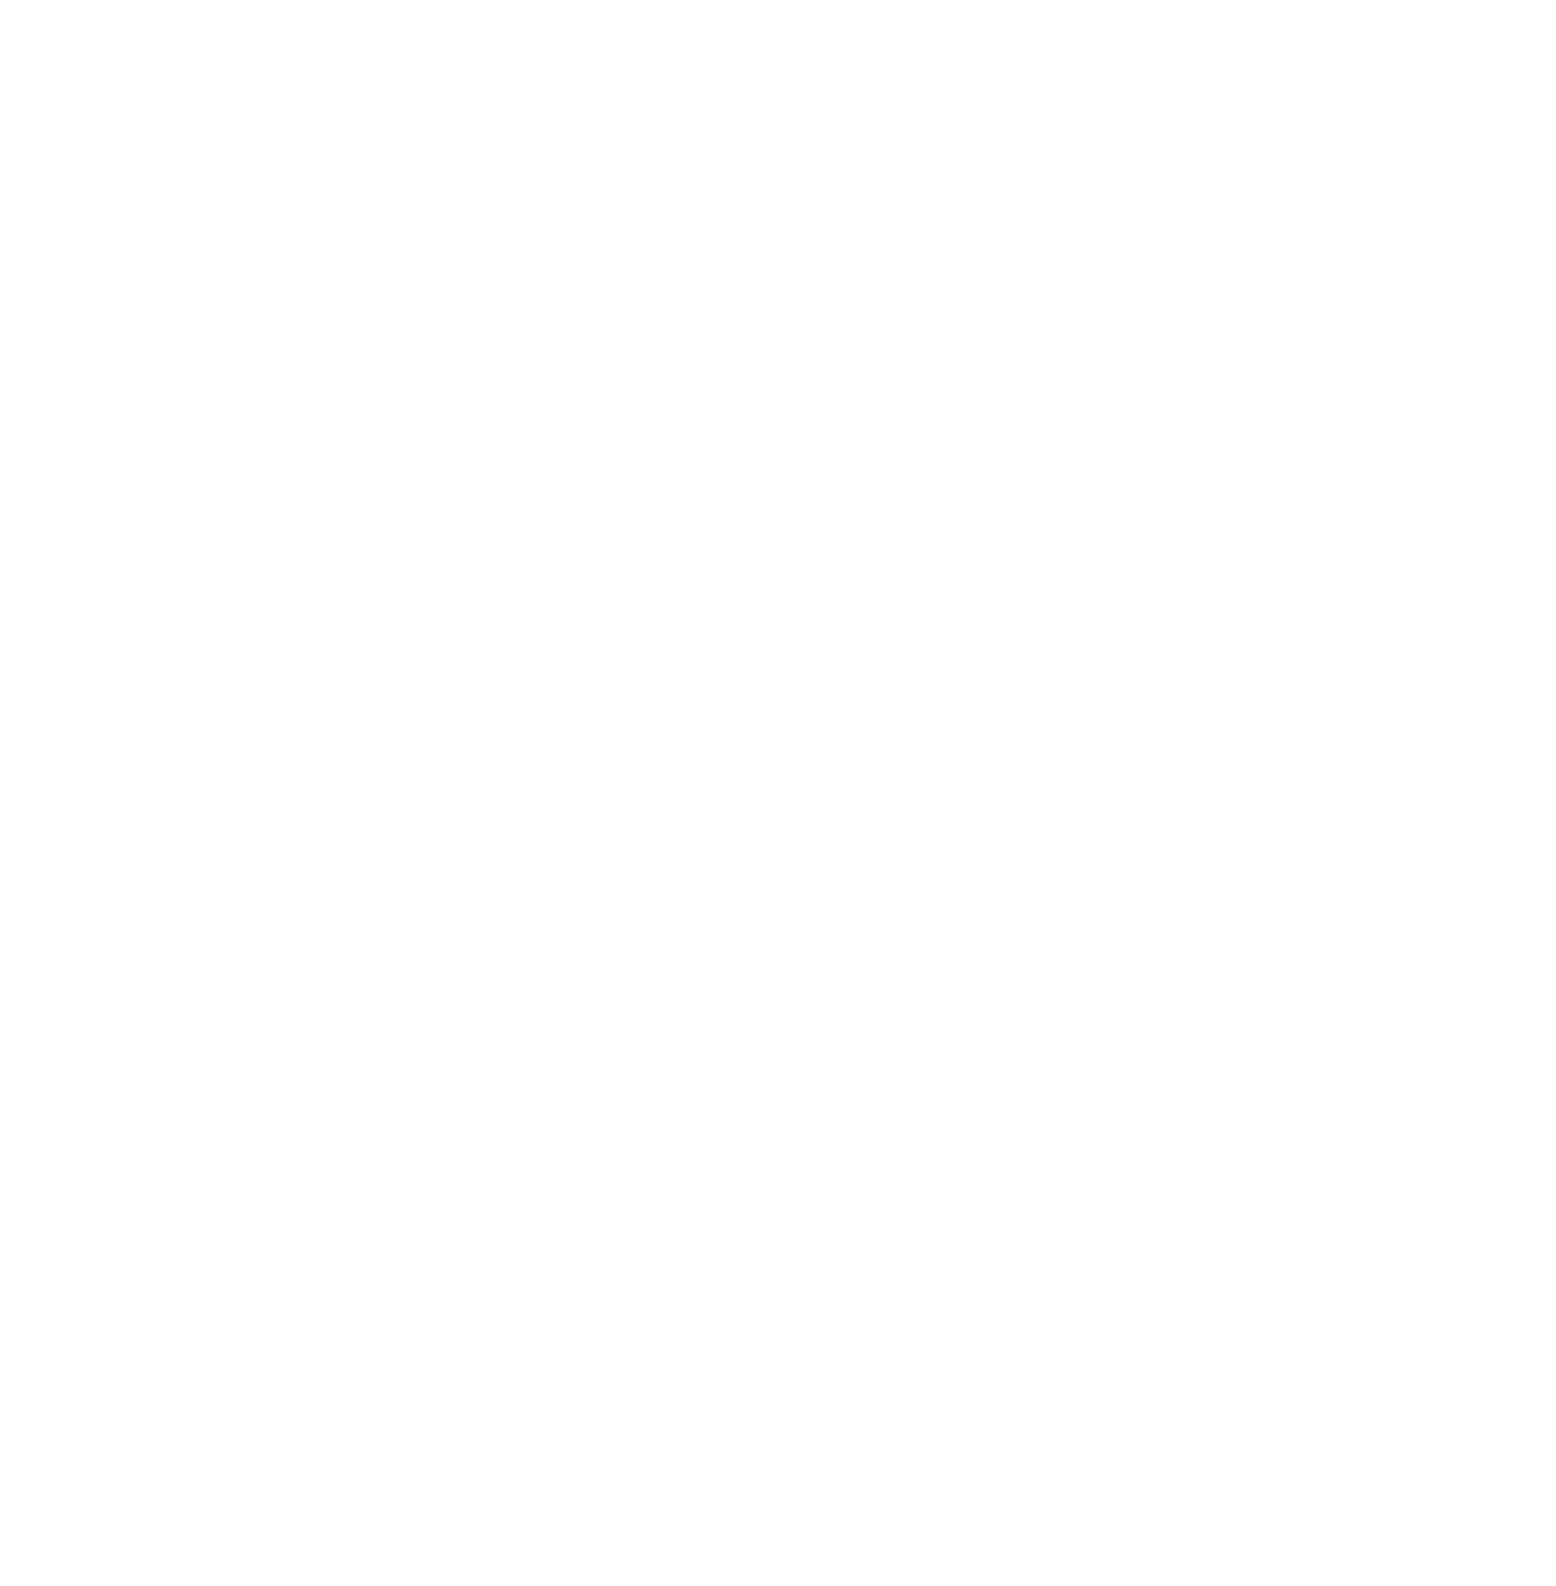 Lucas GC logo for dark backgrounds (transparent PNG)